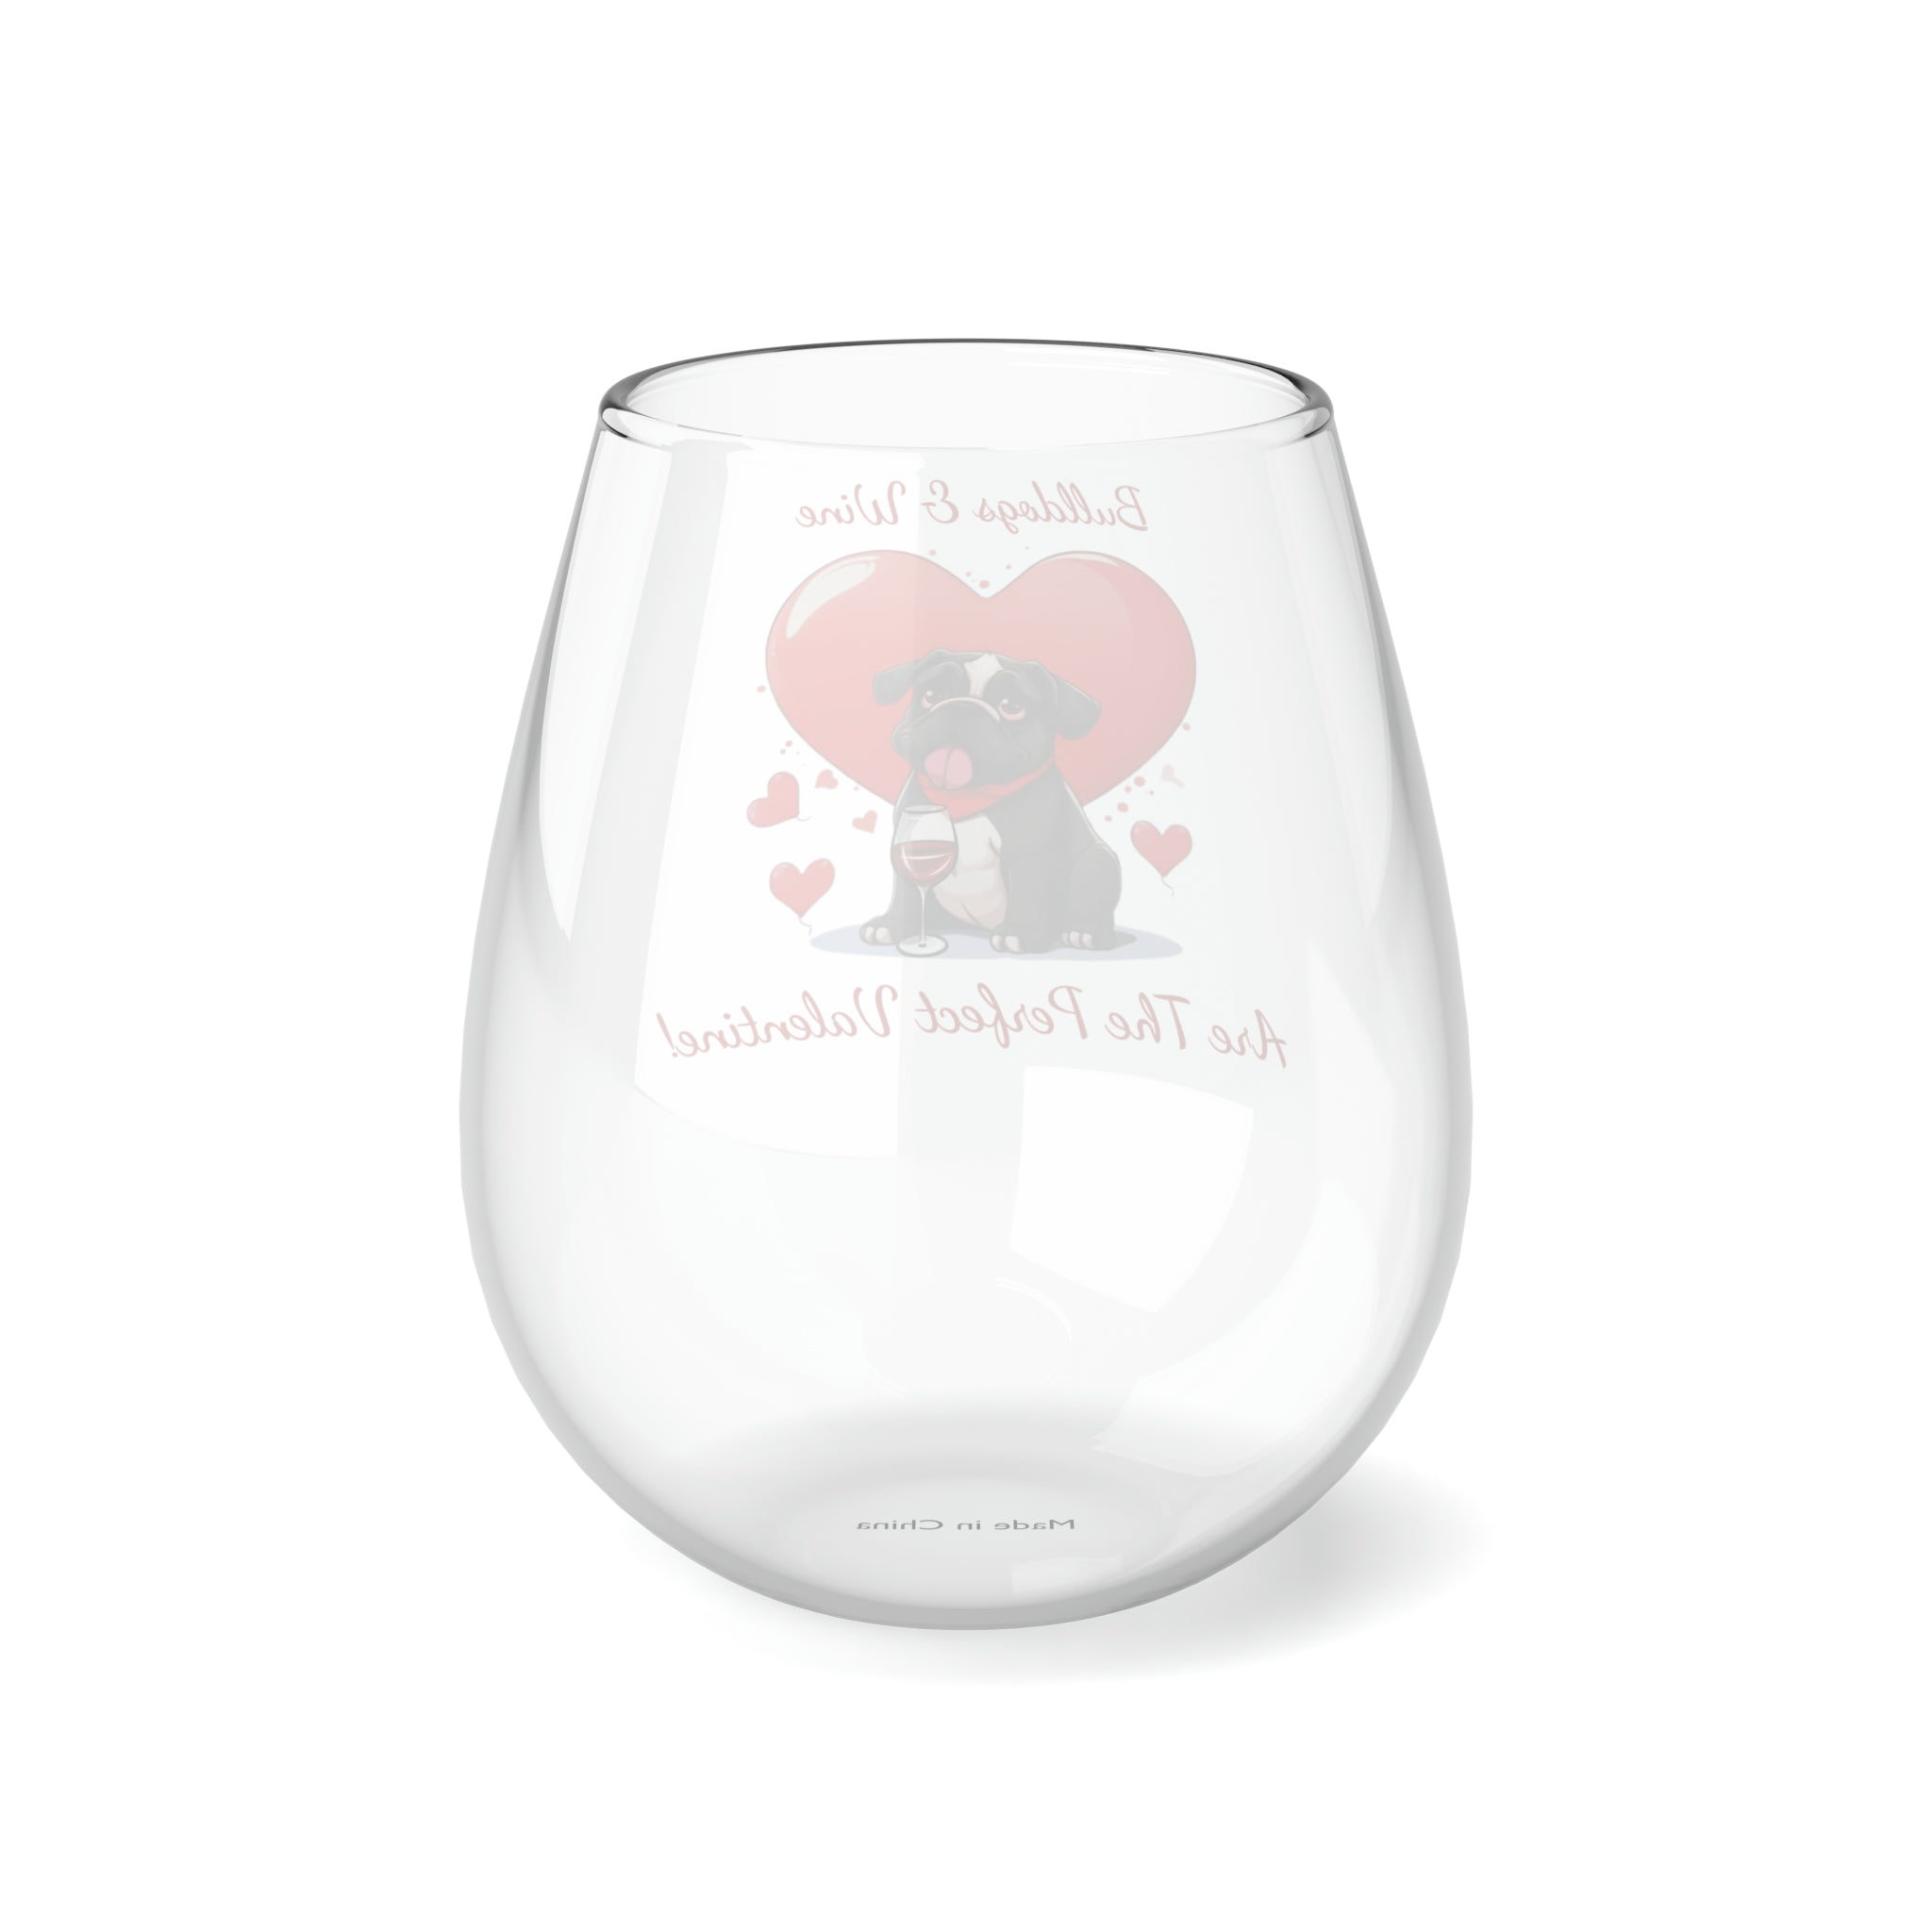 Bulldogs & Wine Are the Perfect Valentine! Stemless Wine Glass - Black English